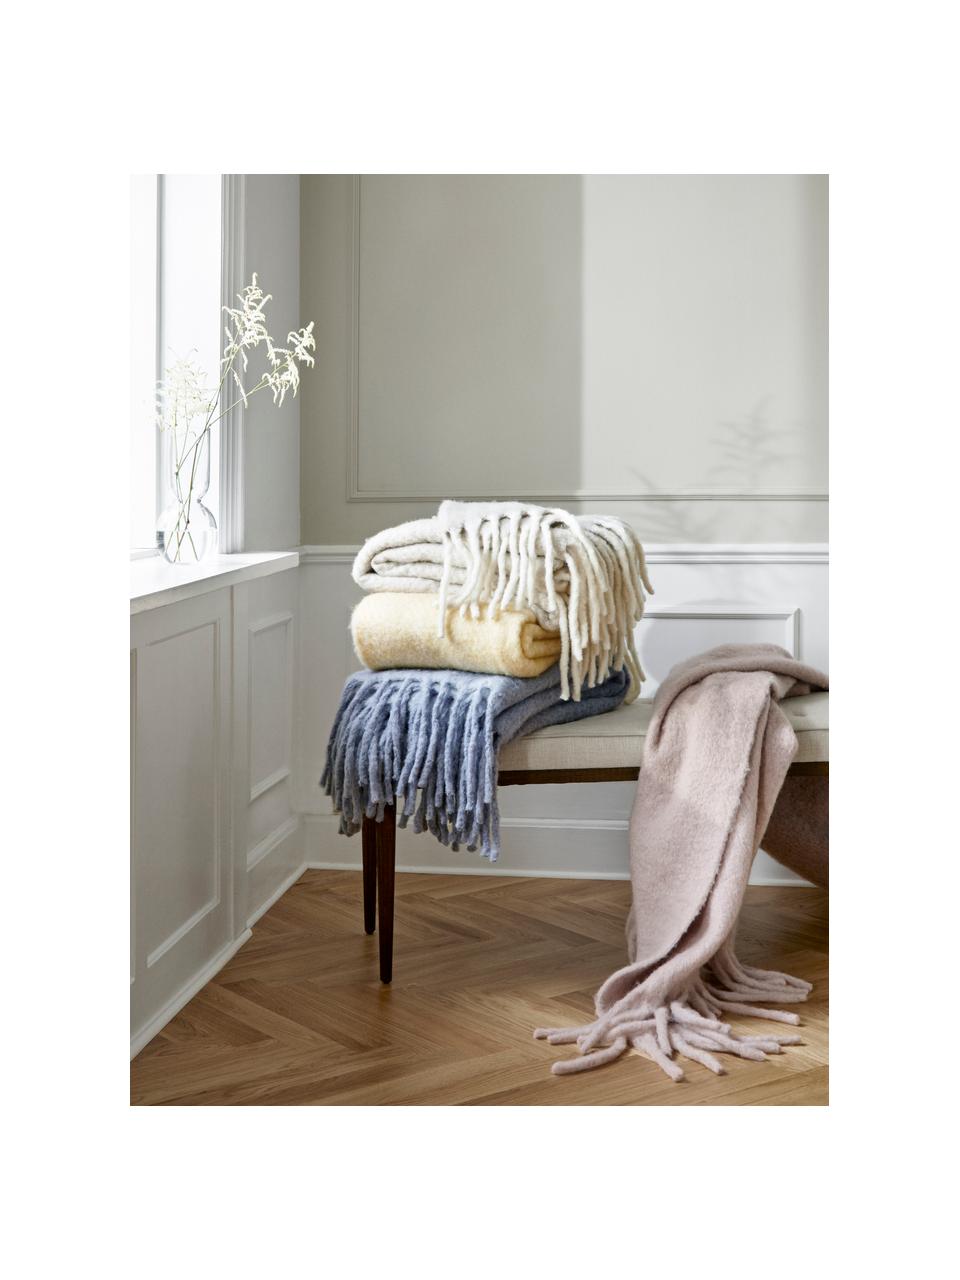 Coperta in lana beige con frange Mathea, 60% lana, 25% acrilico, 15% nylon, Beige, color crema, Lung. 170 x Larg. 130 cm